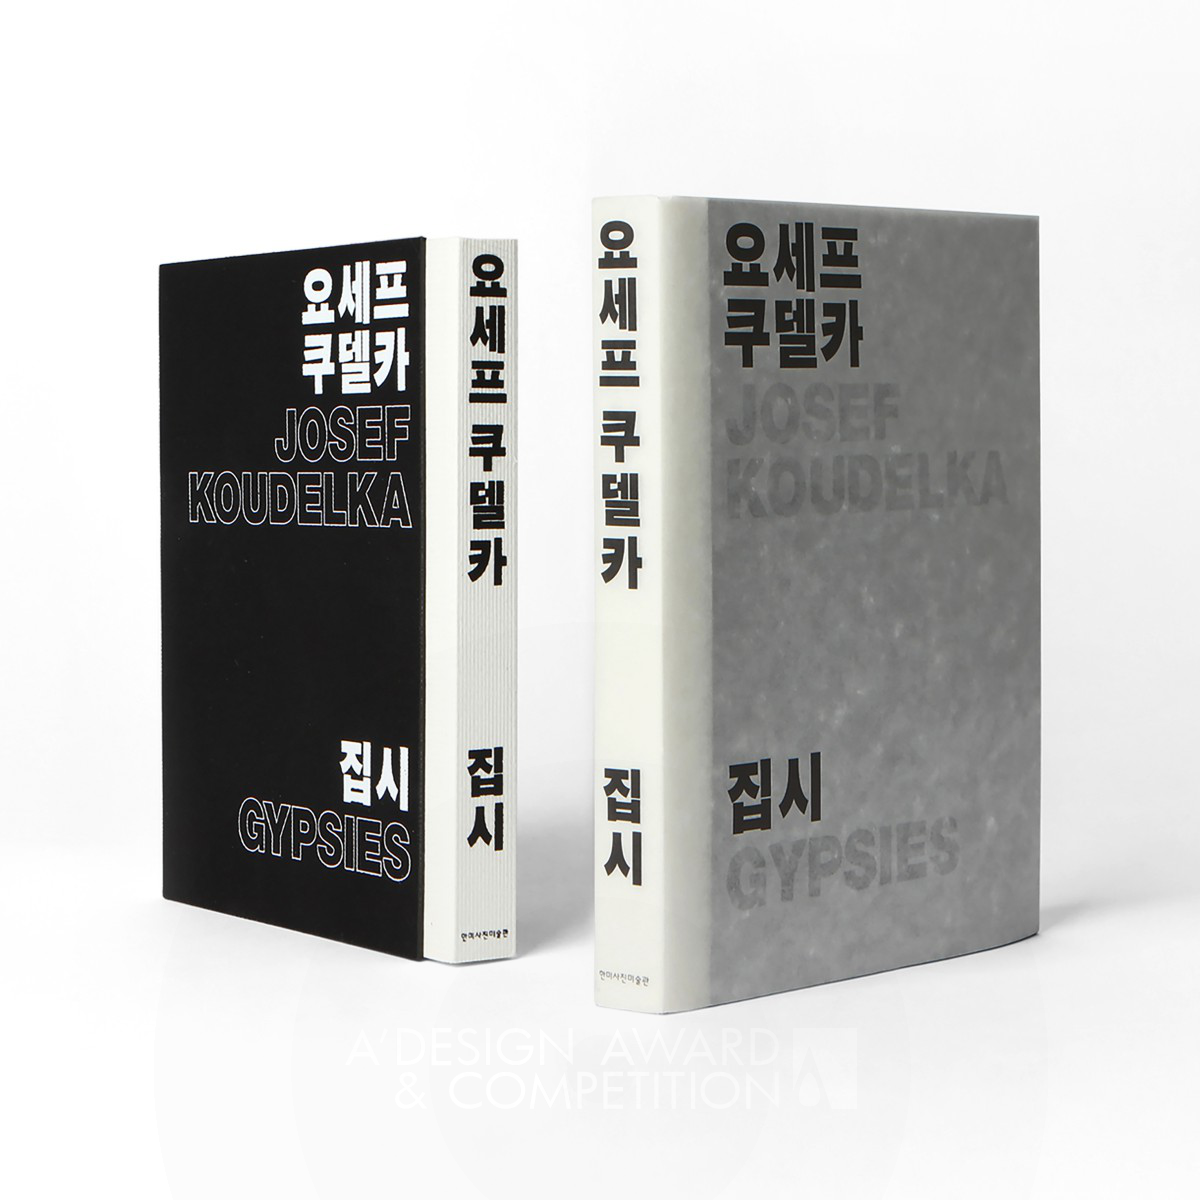 Josef Koudelka Gypsies Book Design by Sunghoon Kim Silver Print and Published Media Design Award Winner 2020 